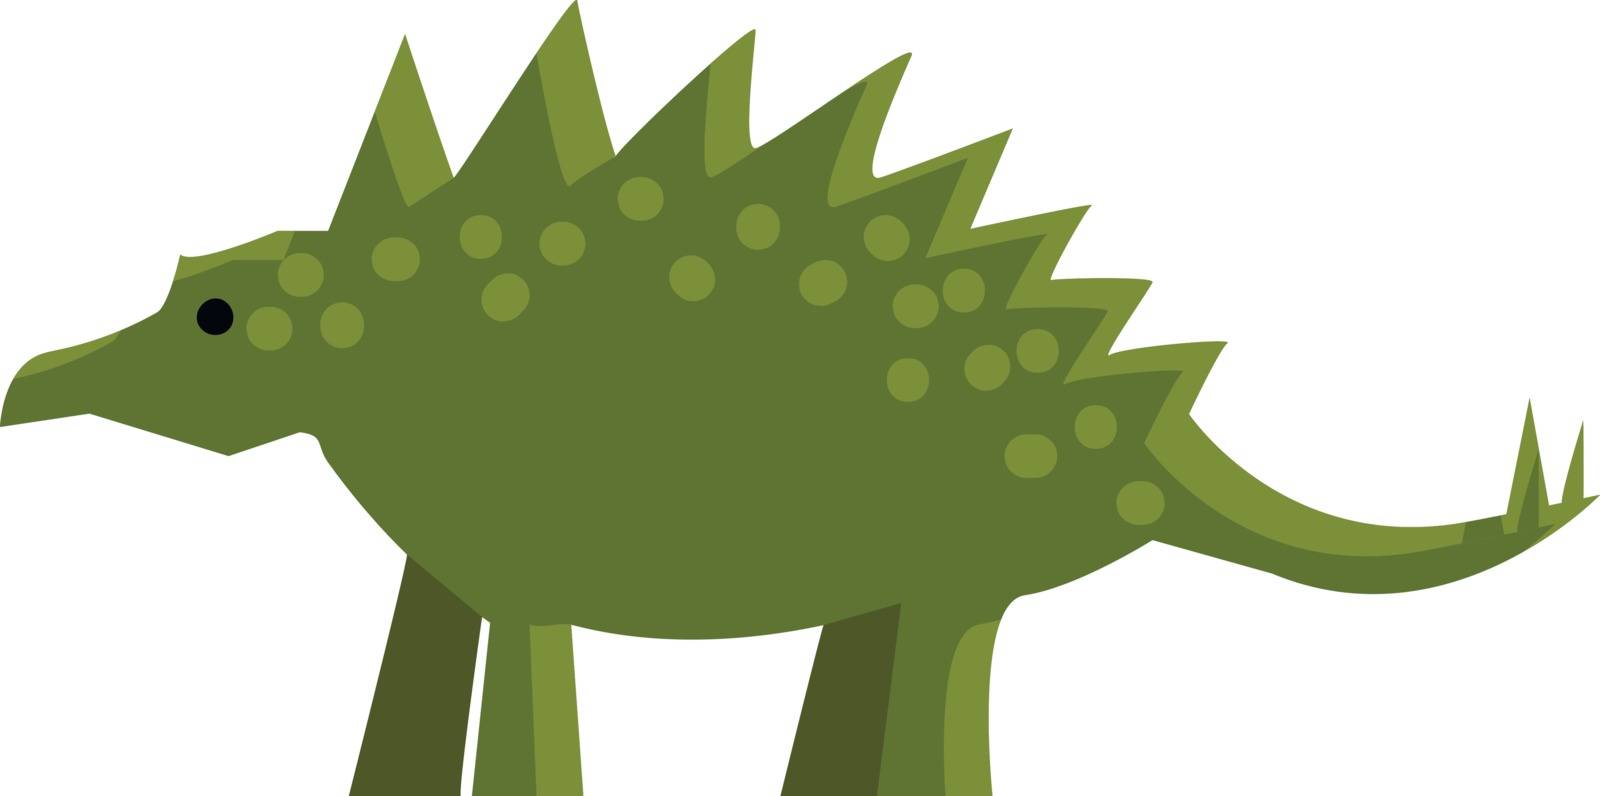 A green spiky dinosaur vector or color illustration by Morphart